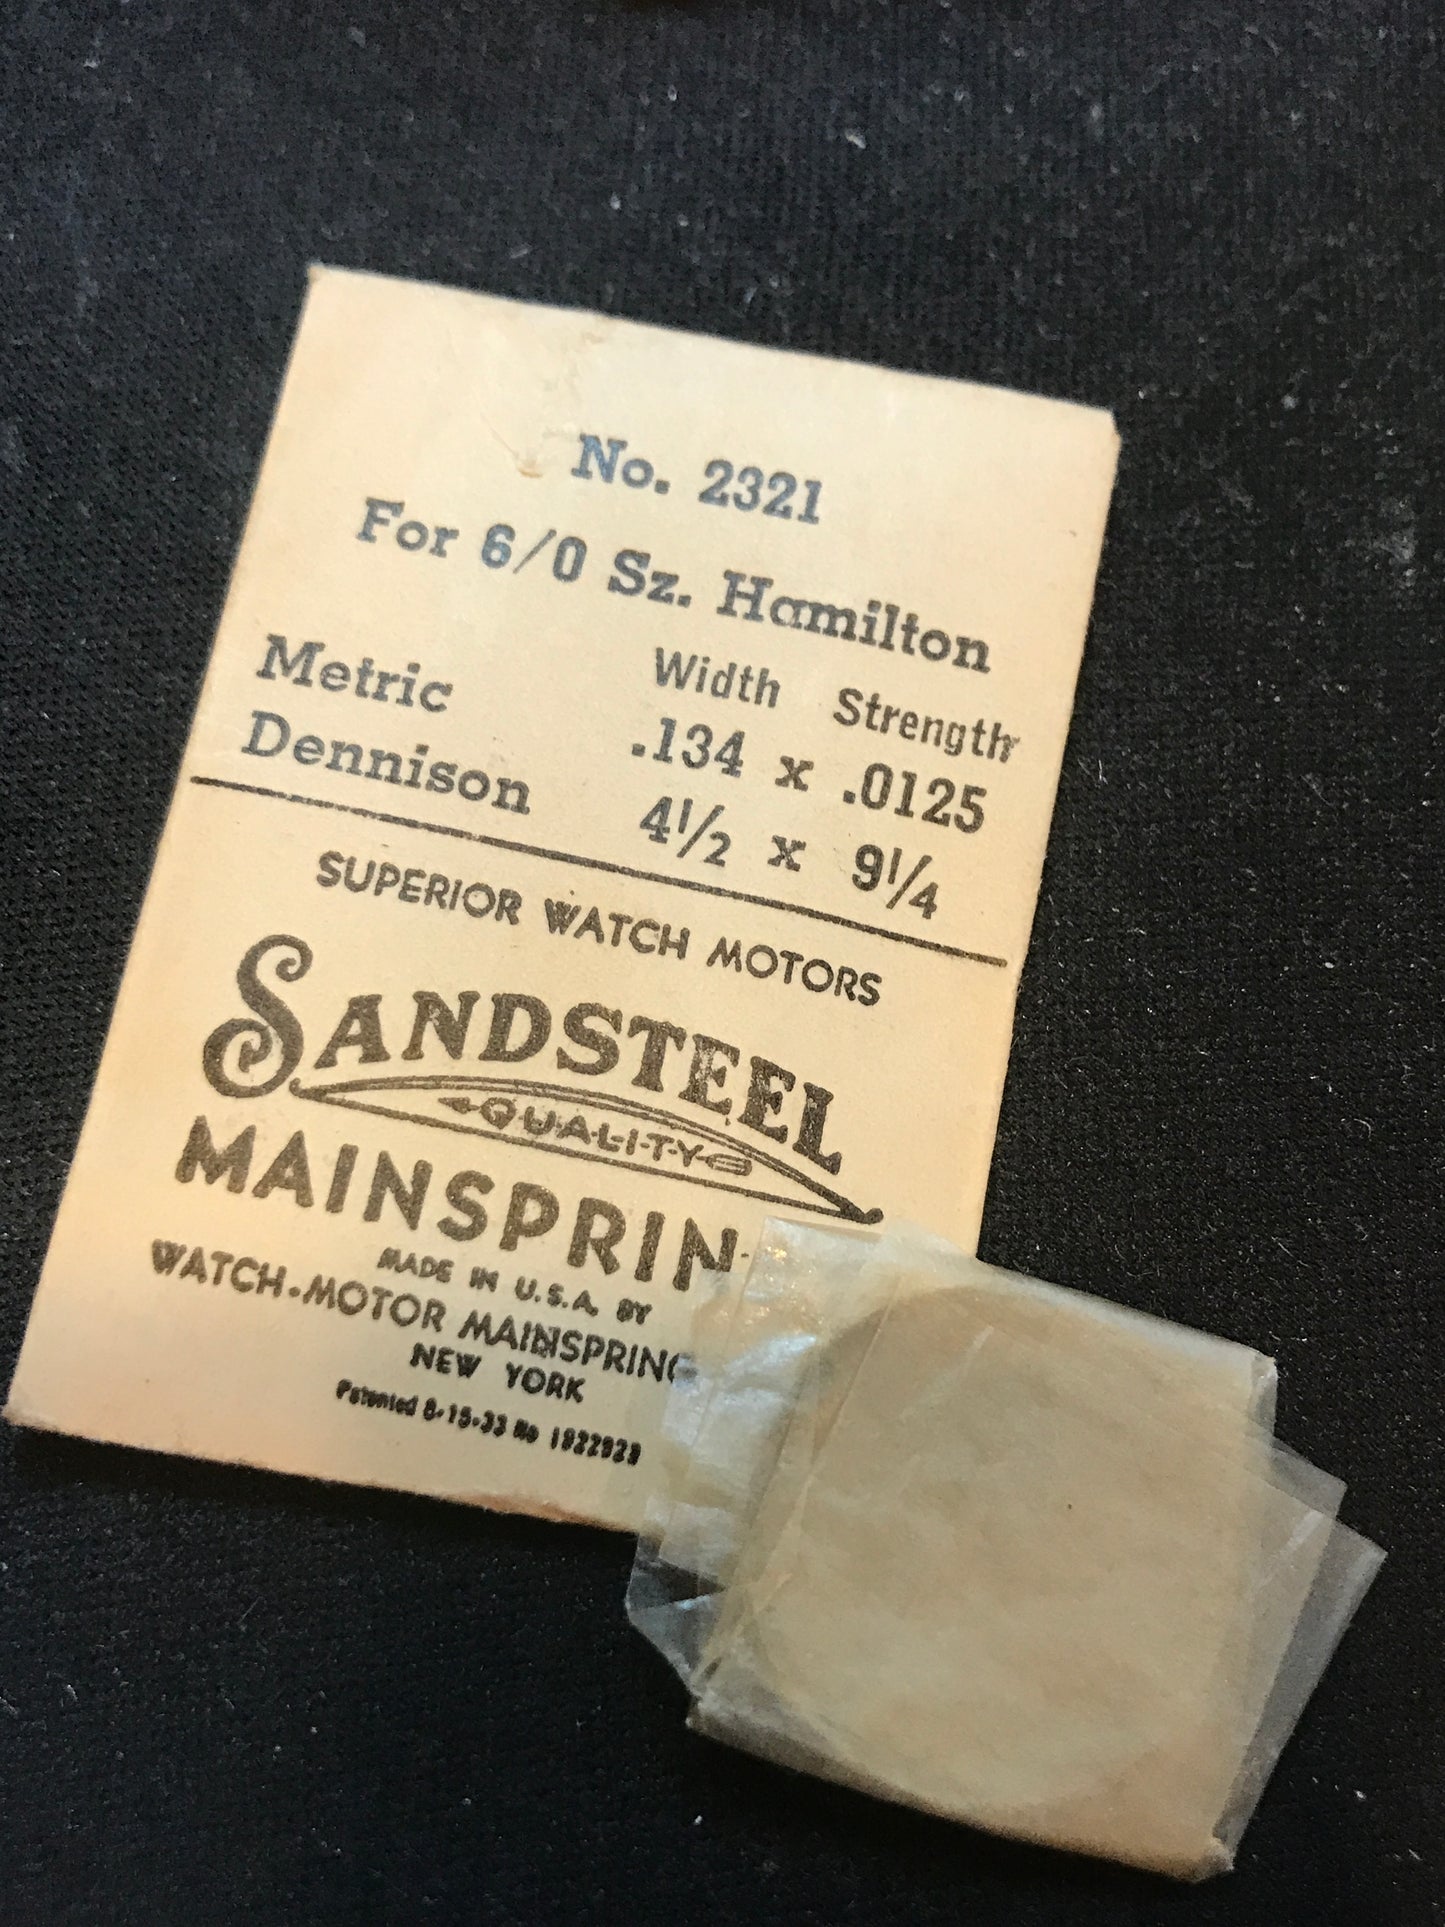 Sandsteel Mainspring for Hamilton 6/0s Factory No. 2321 - Steel